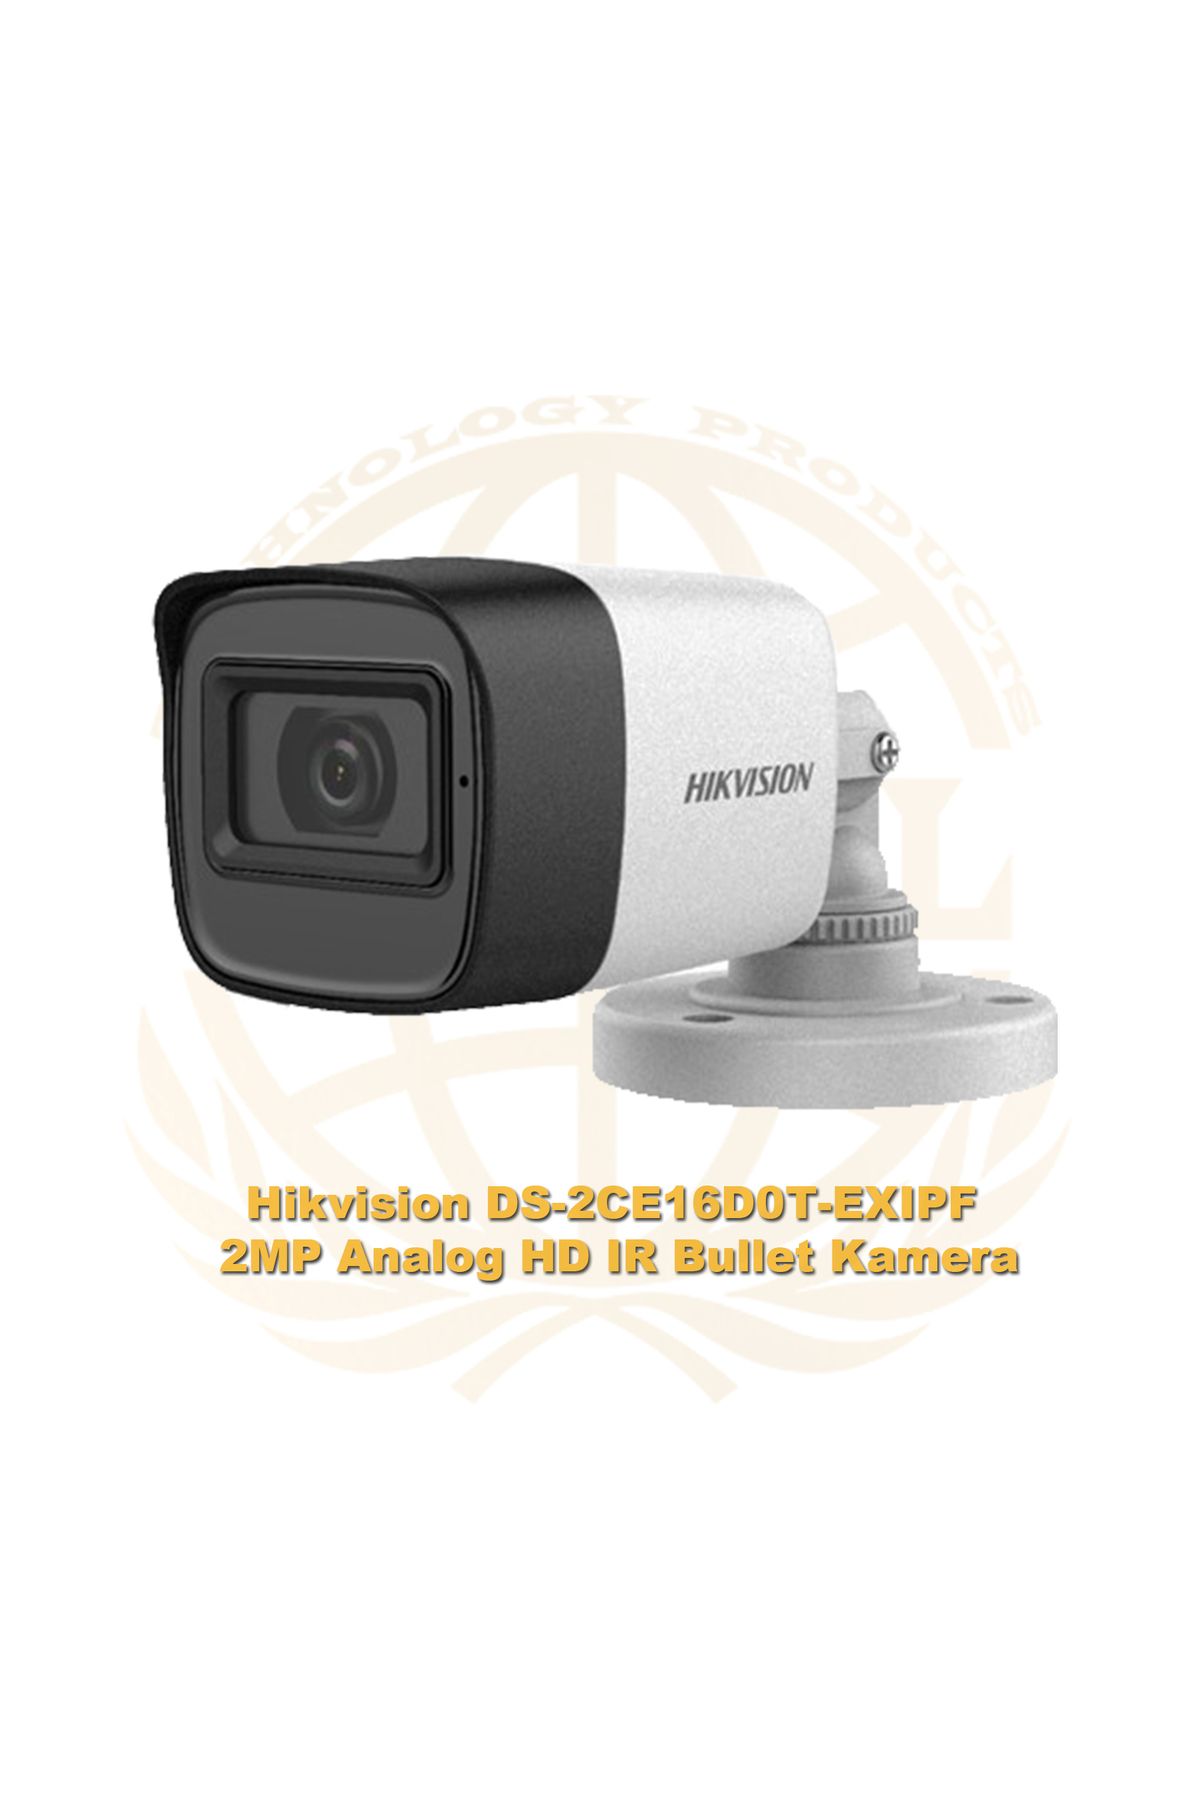 Hikvision DS-2CE16D0T-EXIPF 2MP Analog HD IR Bullet Kamera